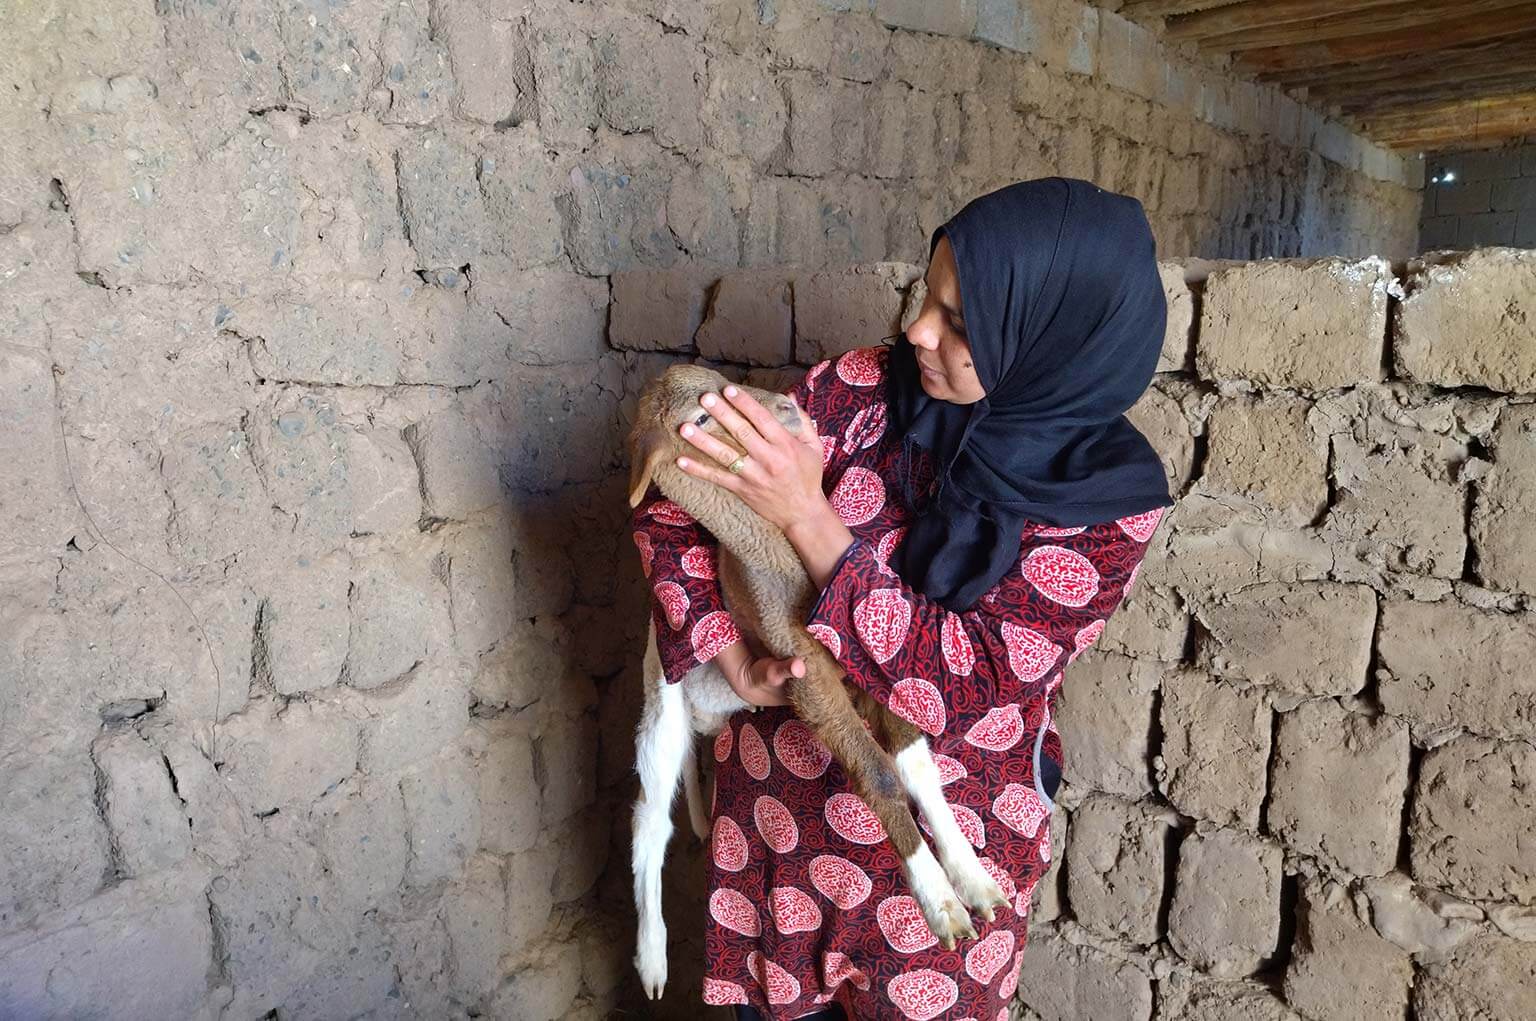 Témoignage de Fatima, jeune éleveuse de moutons à Soukra au Maroc